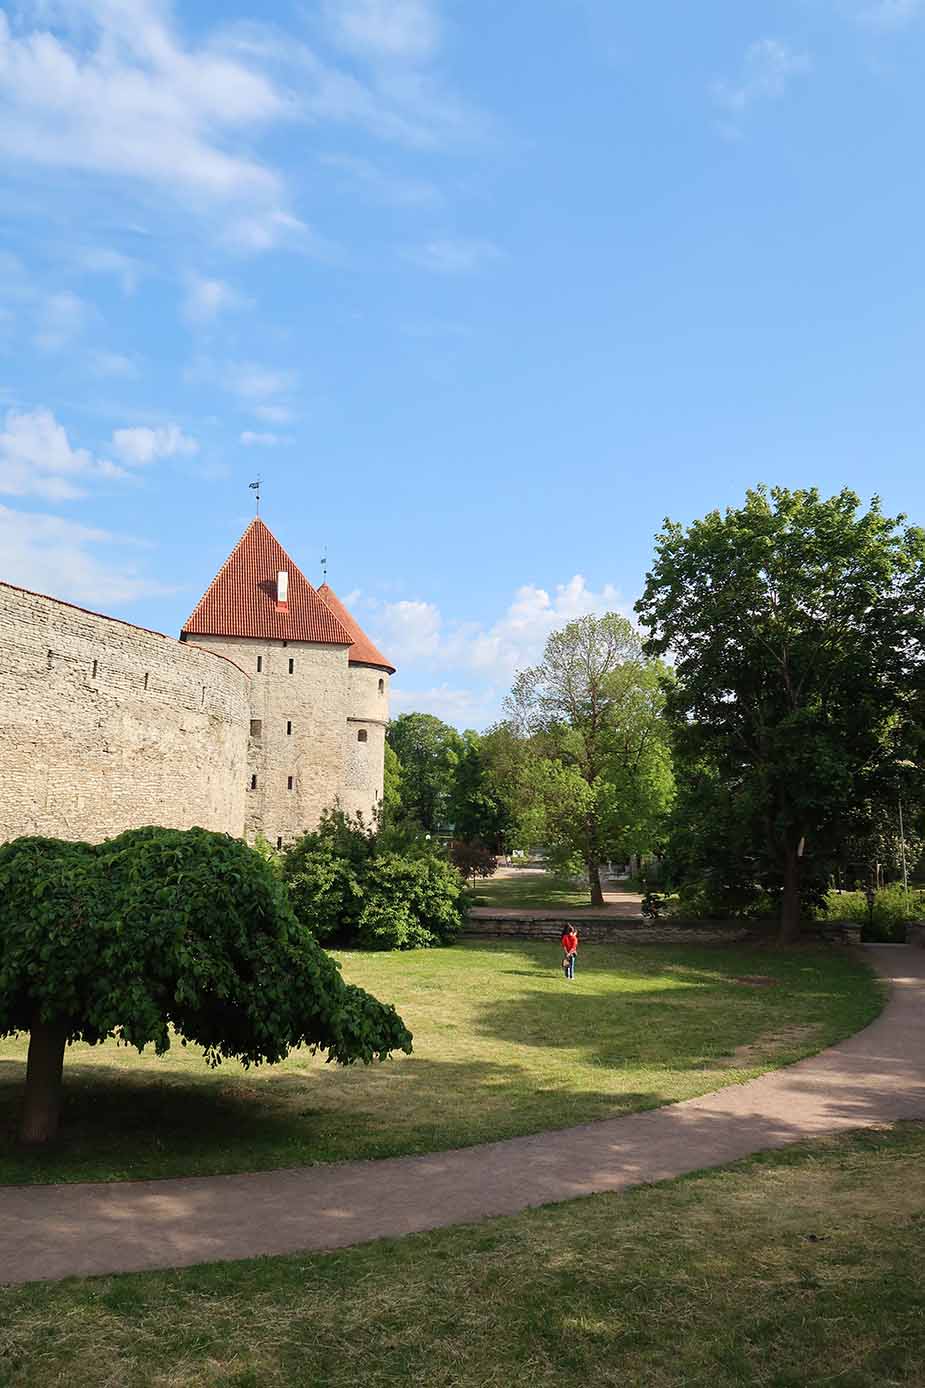 Stadsmuur van Tallinn in Estland